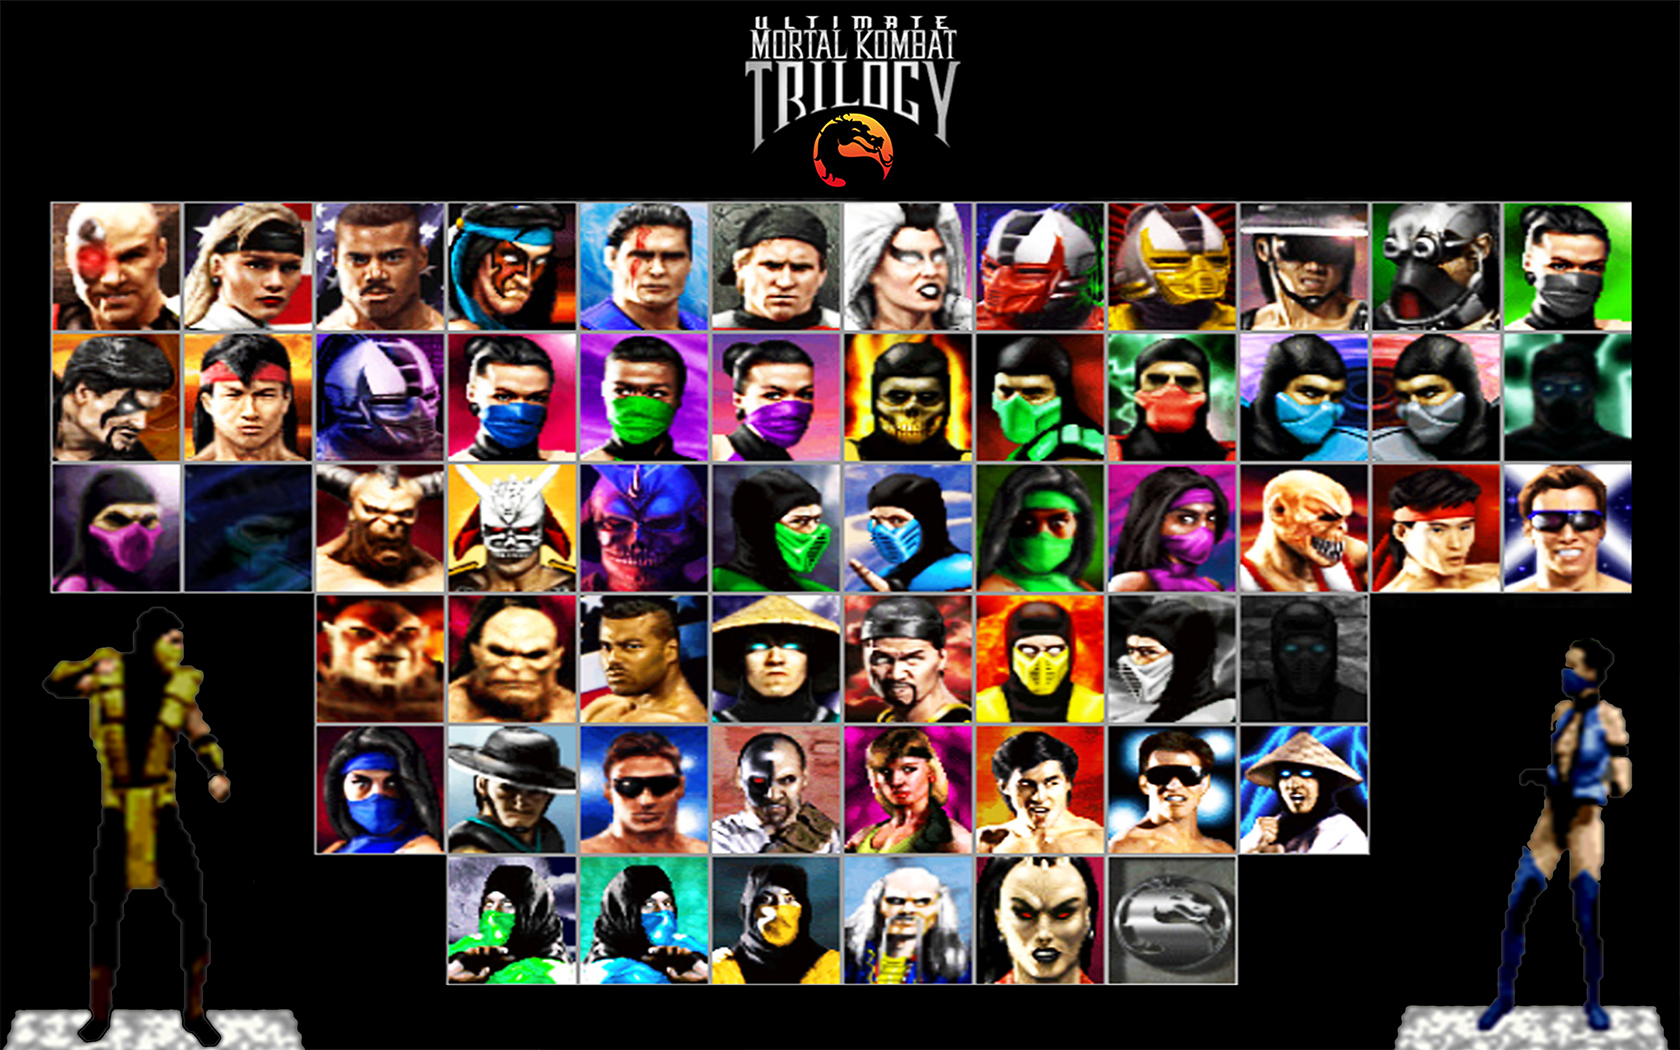 Бесплатная игра мортал комбат 3. MK 3/Ultimate/Trilogy. Ultimate Mortal Kombat 3 Trilogy. Мортал комбат Trilogy 3 Ultimate. Игра на mk3 Ultimate.